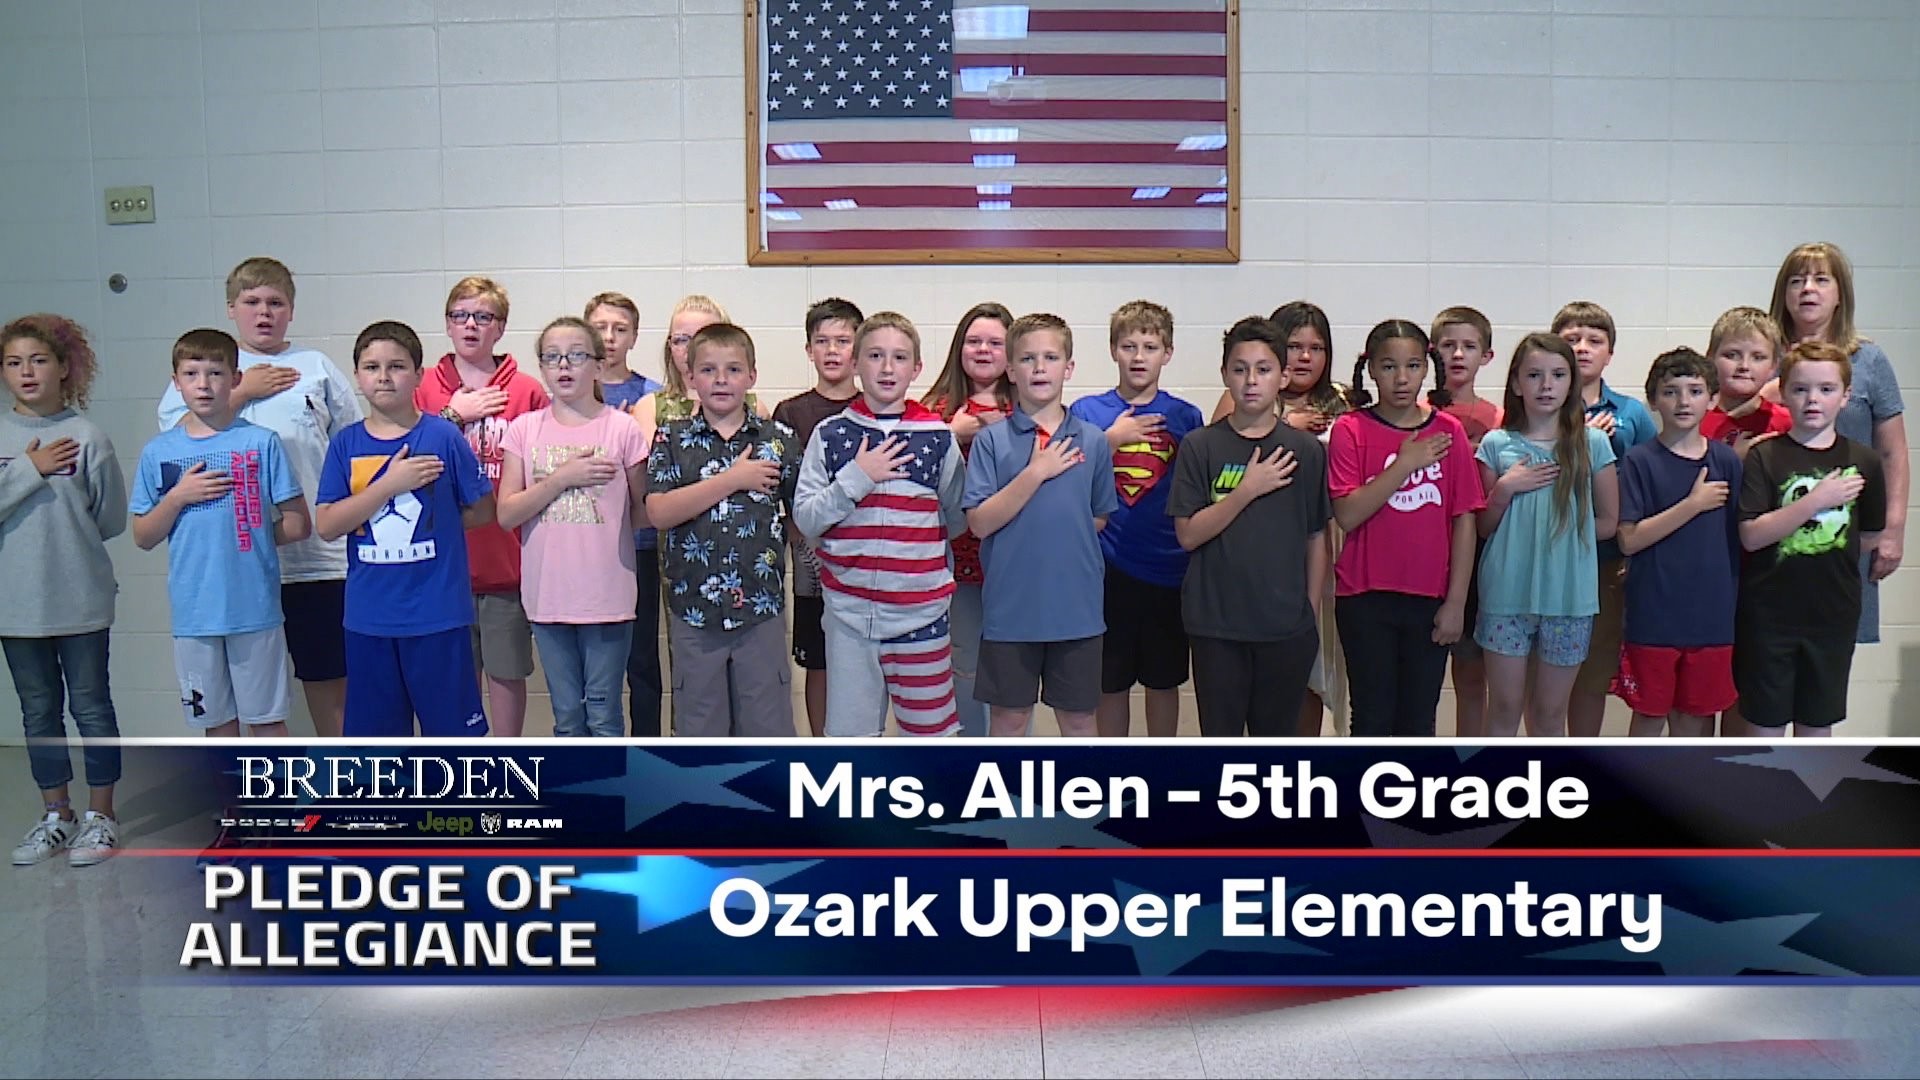 Mrs. Allen, 5th Grade Ozark Upper Elementary